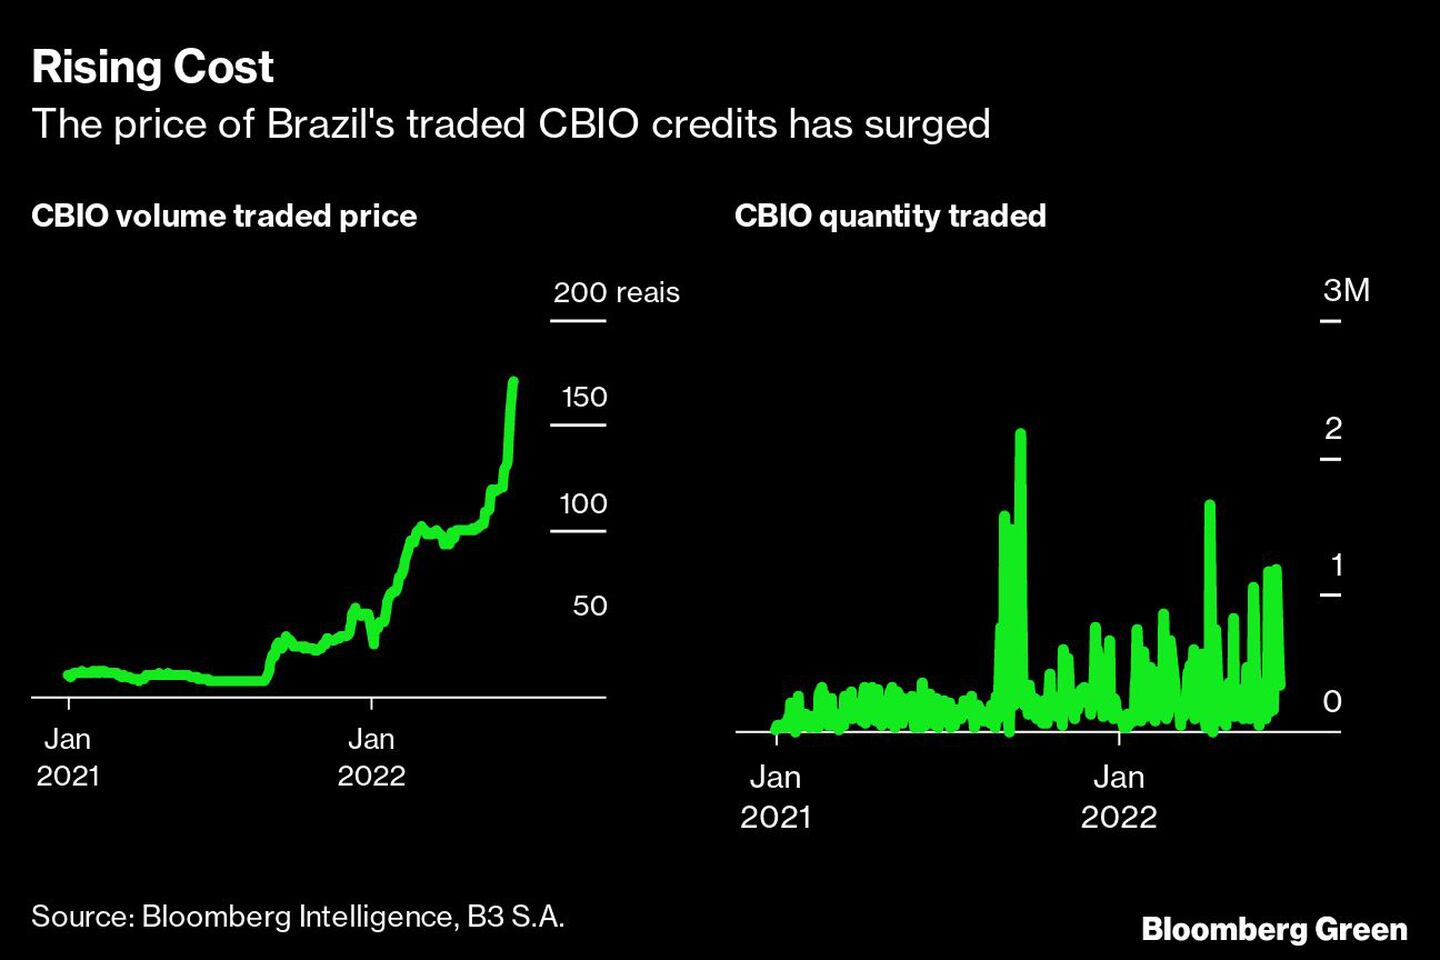 Rising Cost | The price of Brazil's traded CBIO credits has surgeddfd